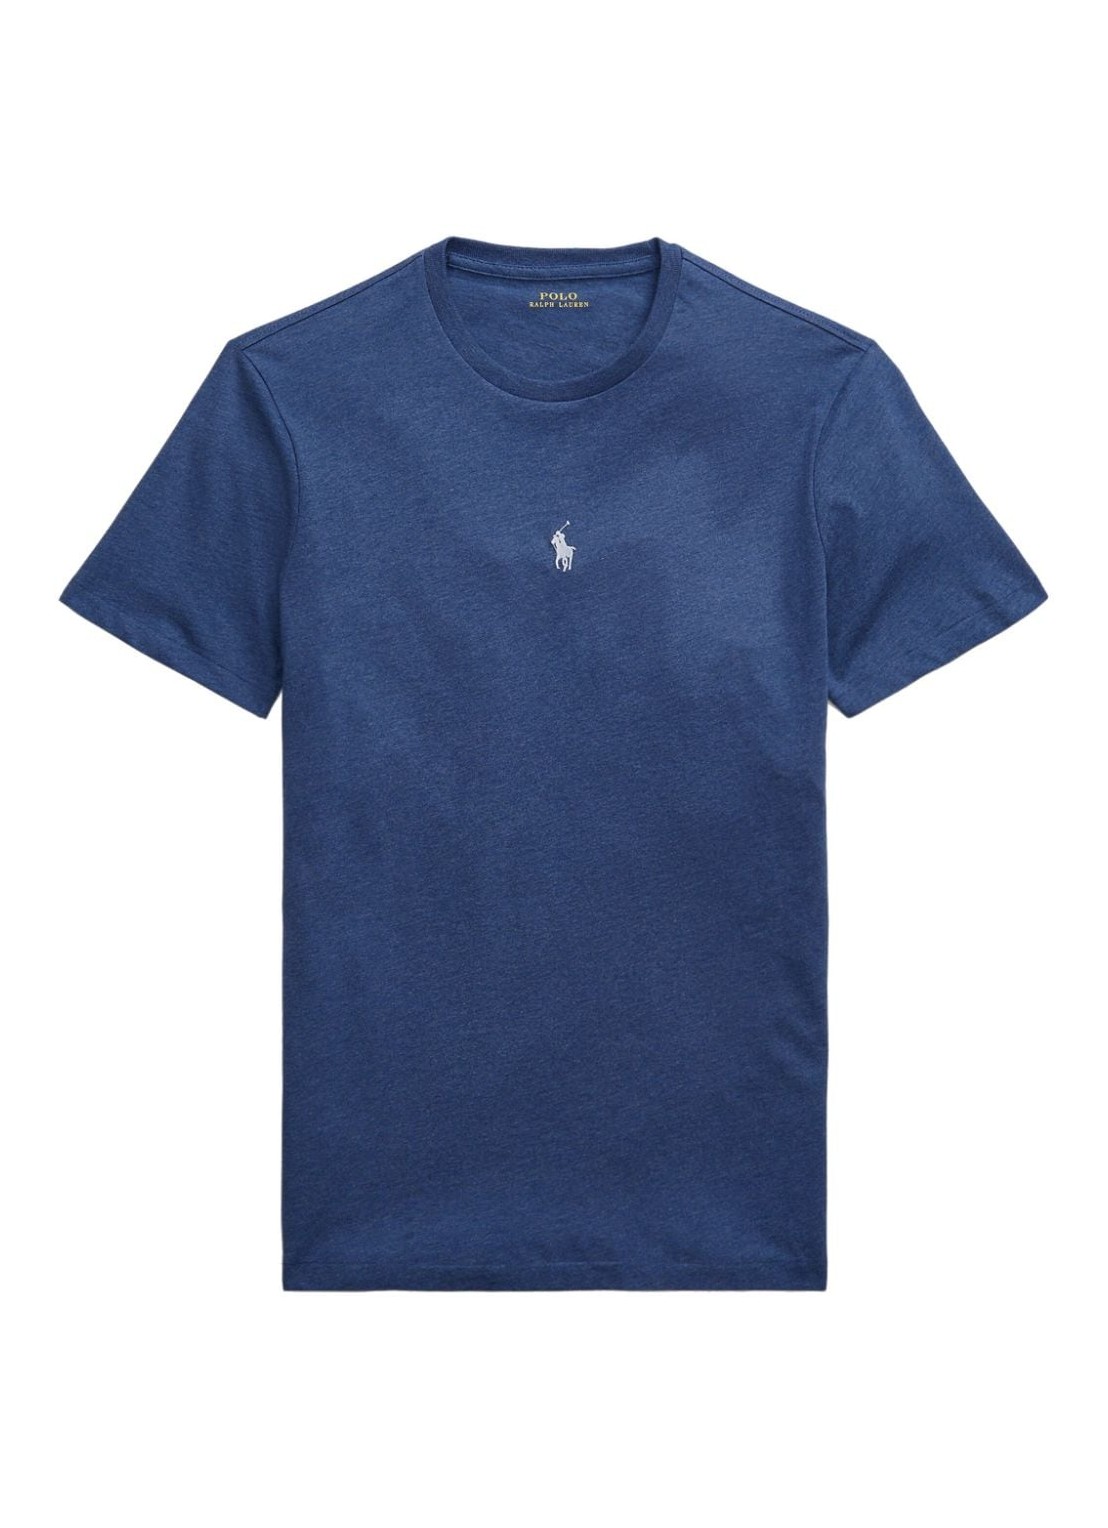 Camiseta polo ralph lauren t-shirt man sscncmslm1-short sleeve-t-shirt 710839046042 derby blue heath